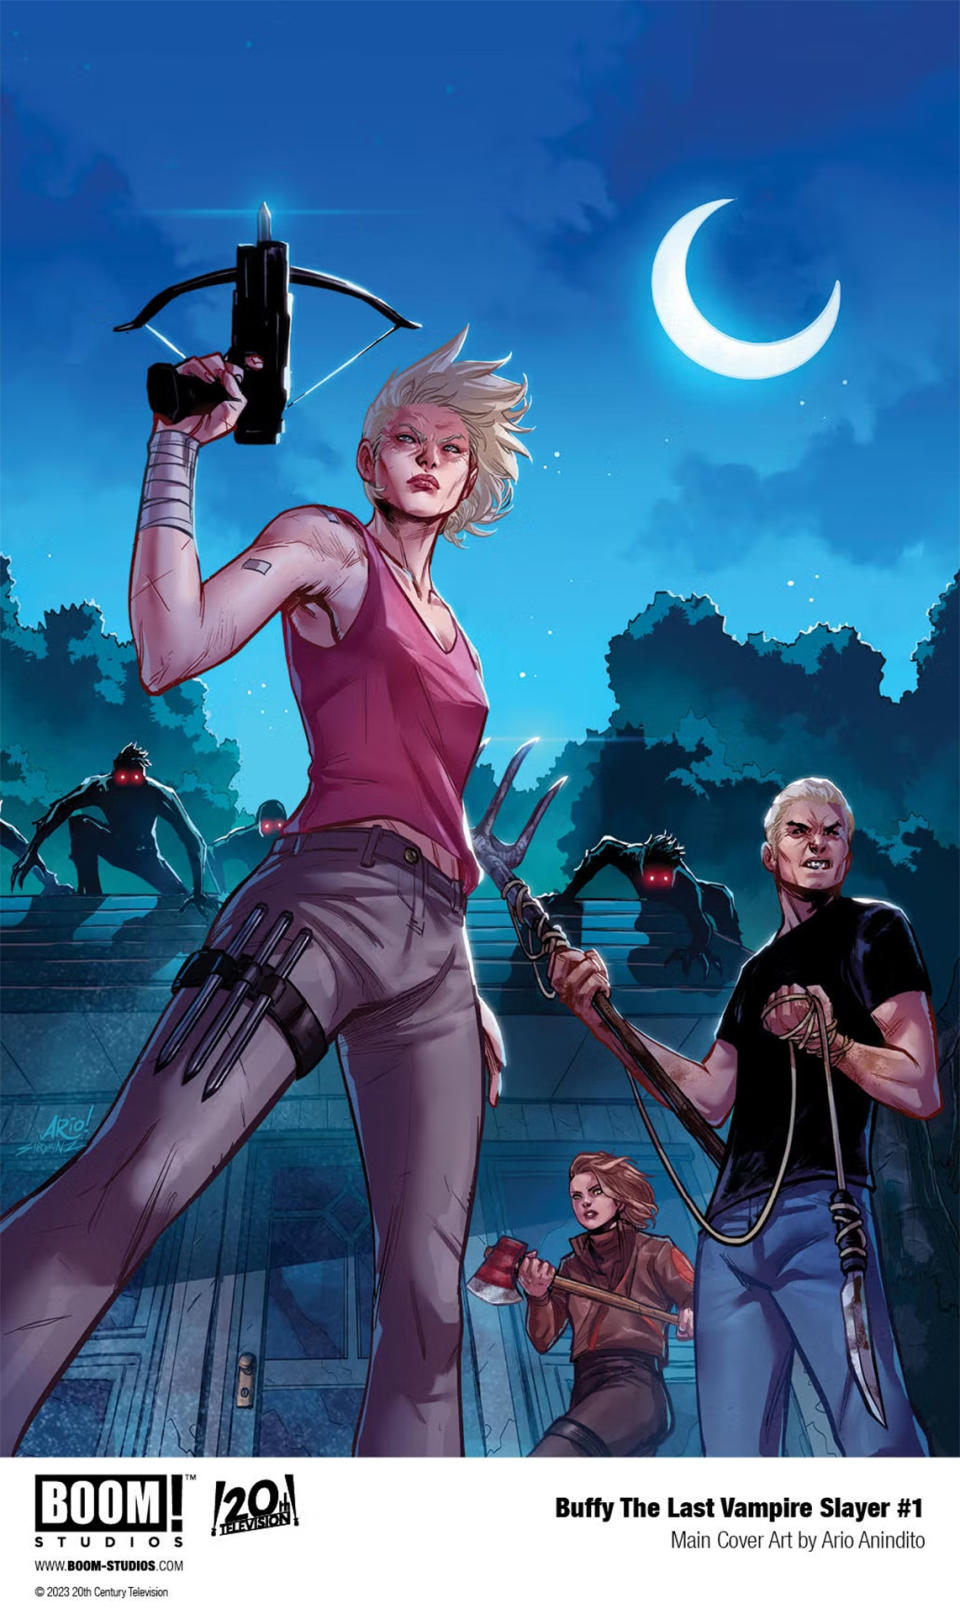 Buffy the Last Vampire Slayer #1 cover art